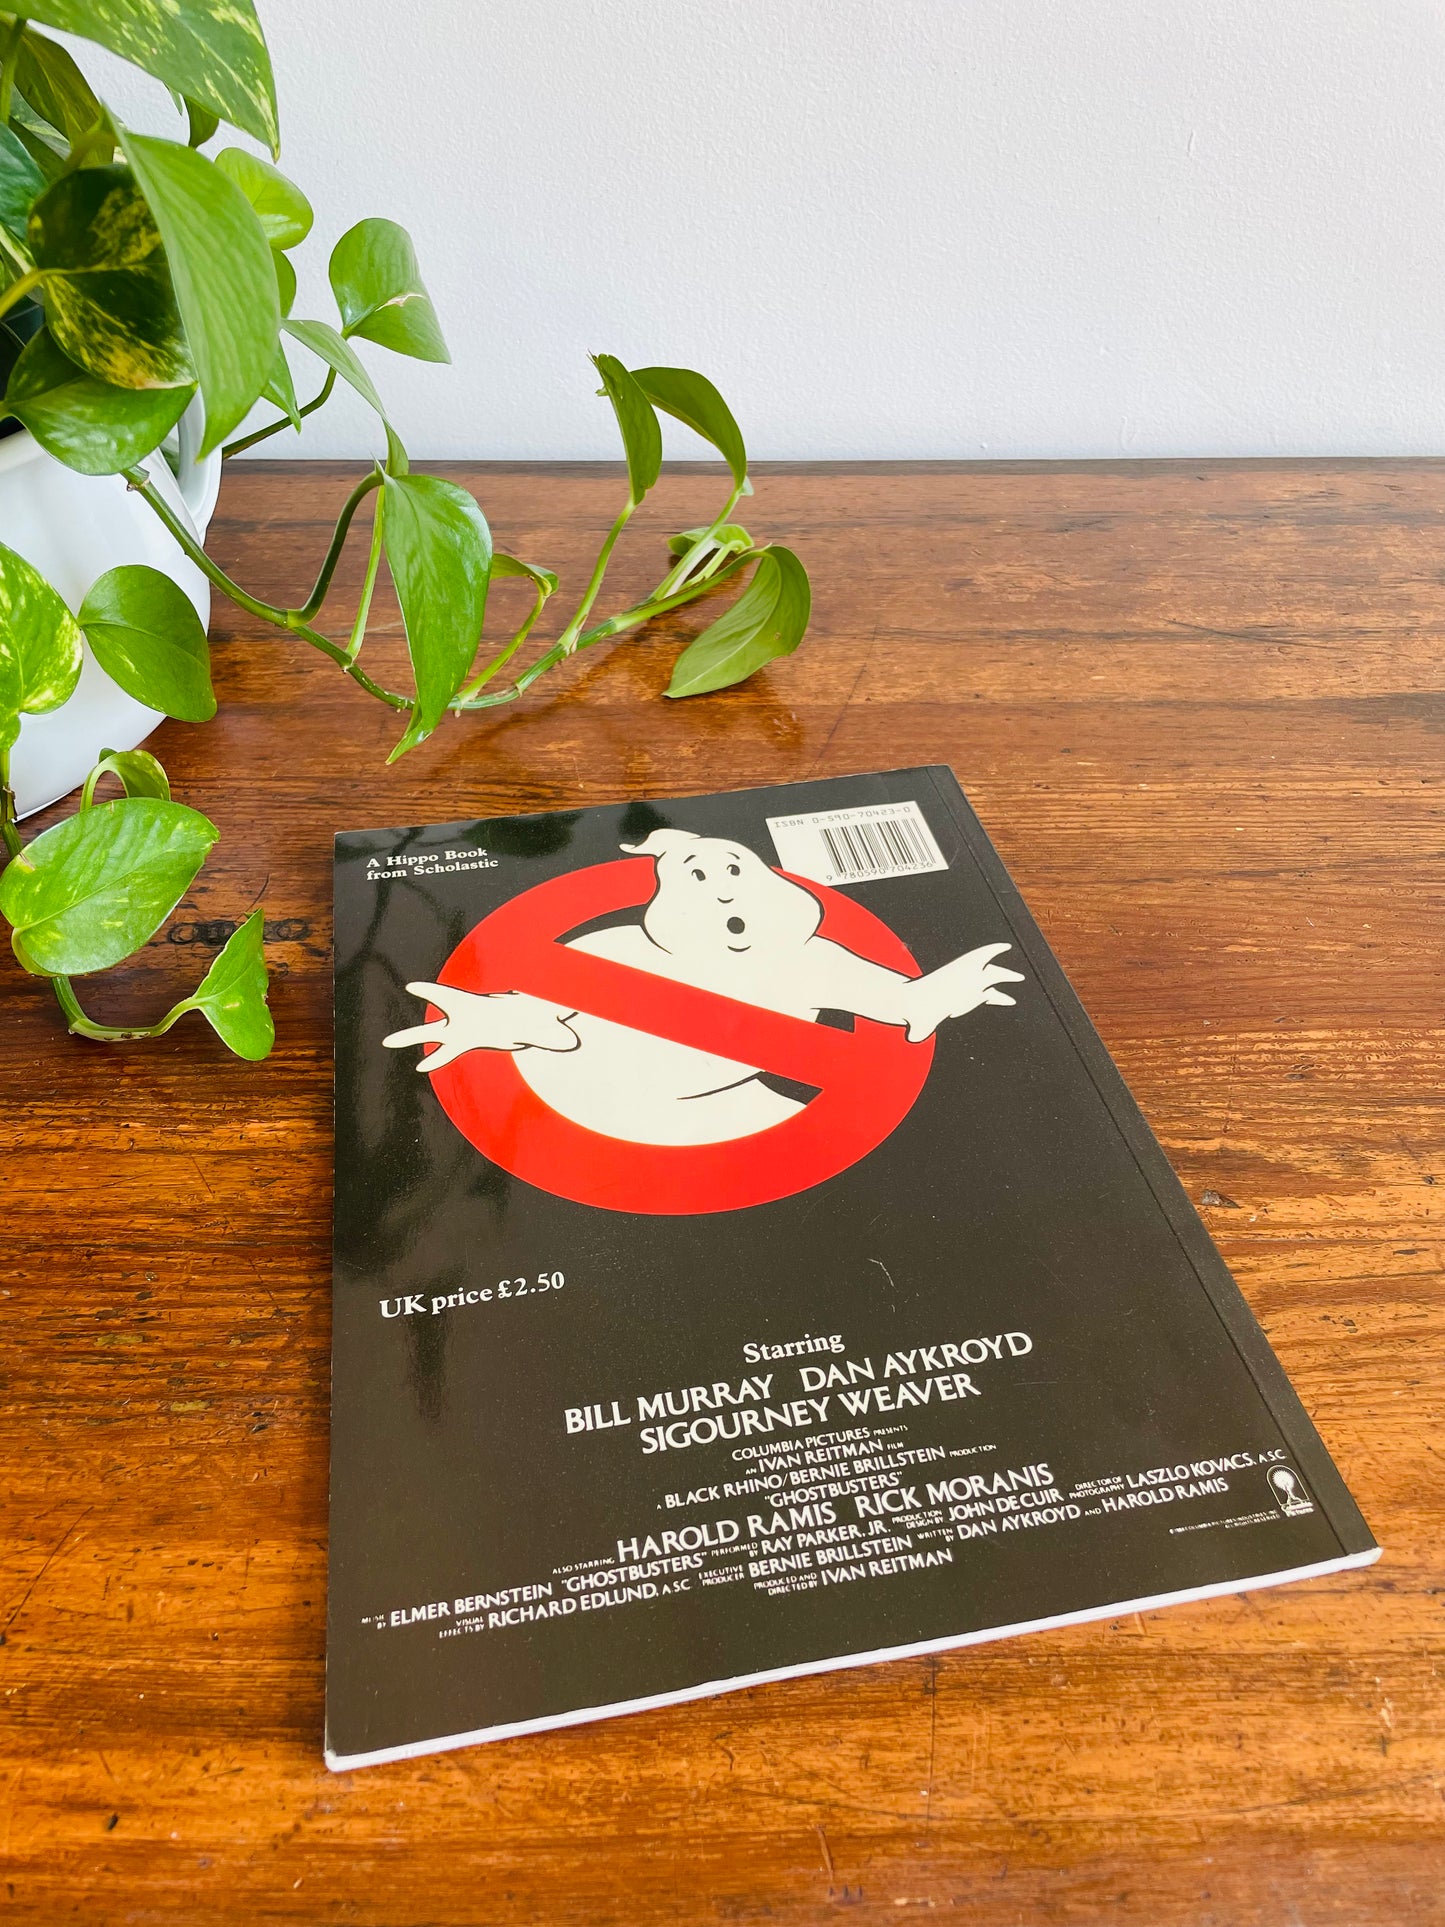 Ghostbusters Storybook By Anne Digby (1984) Book